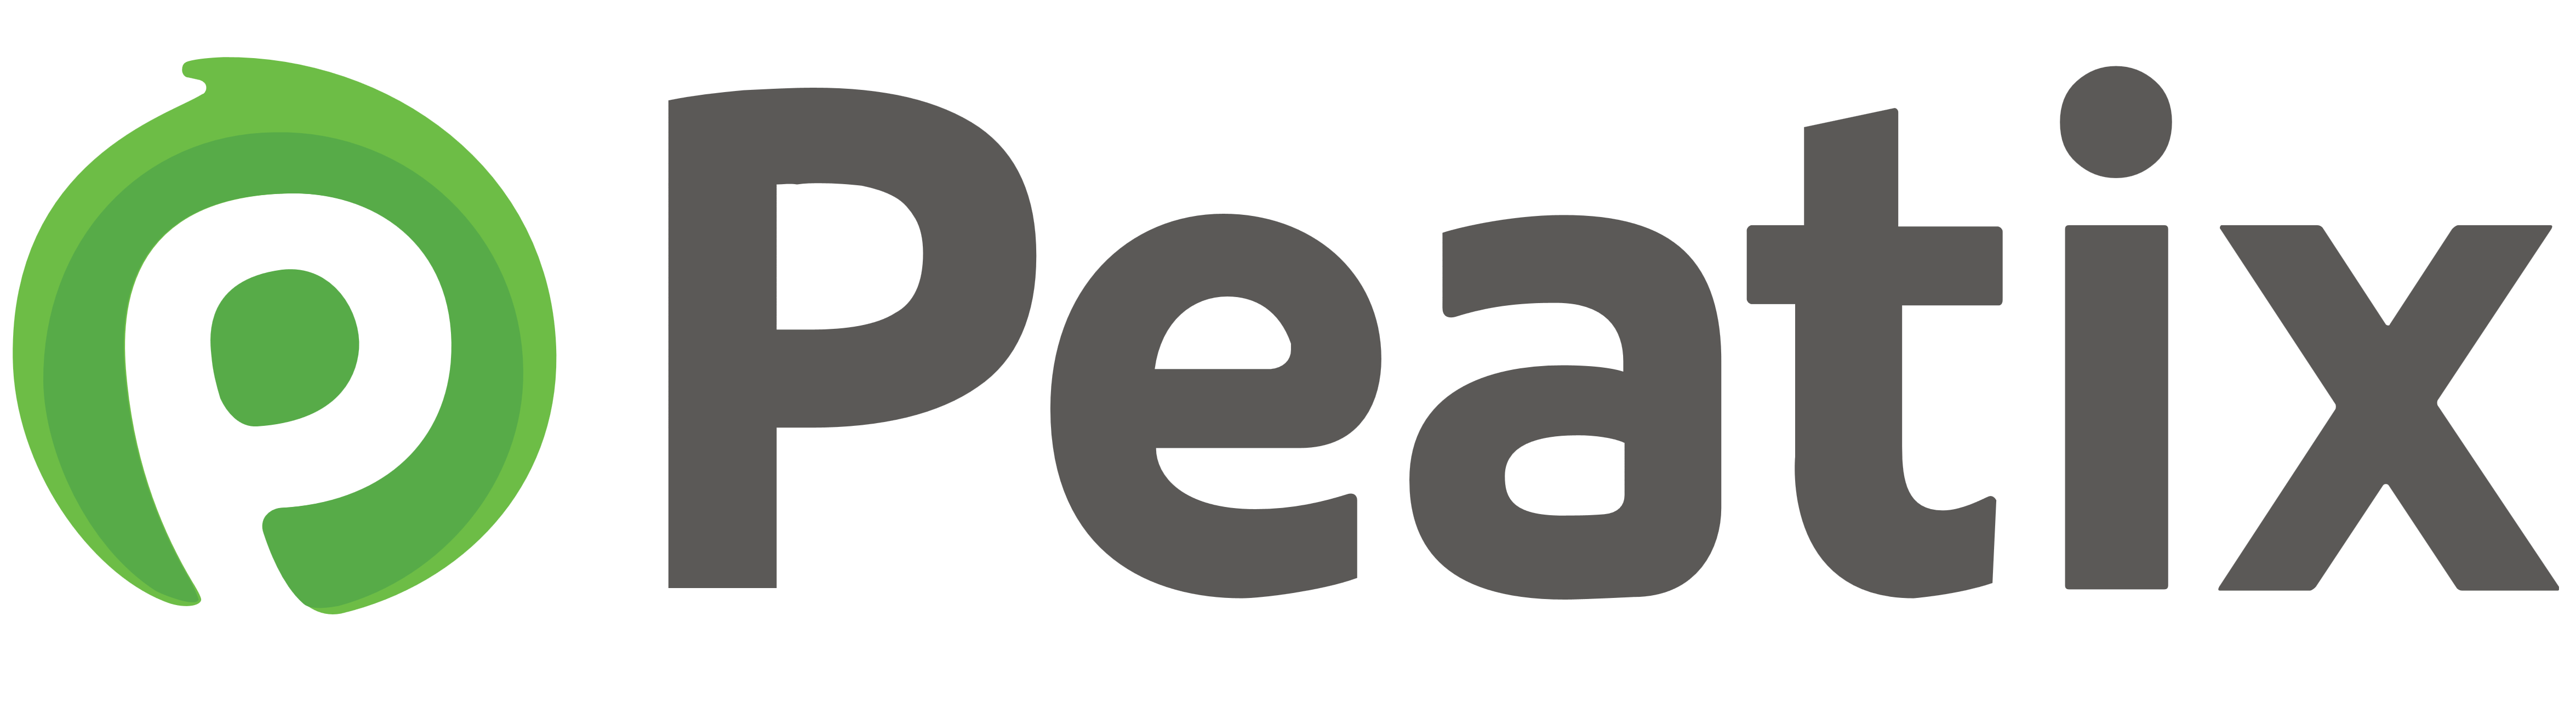 Peatix logo, logotype